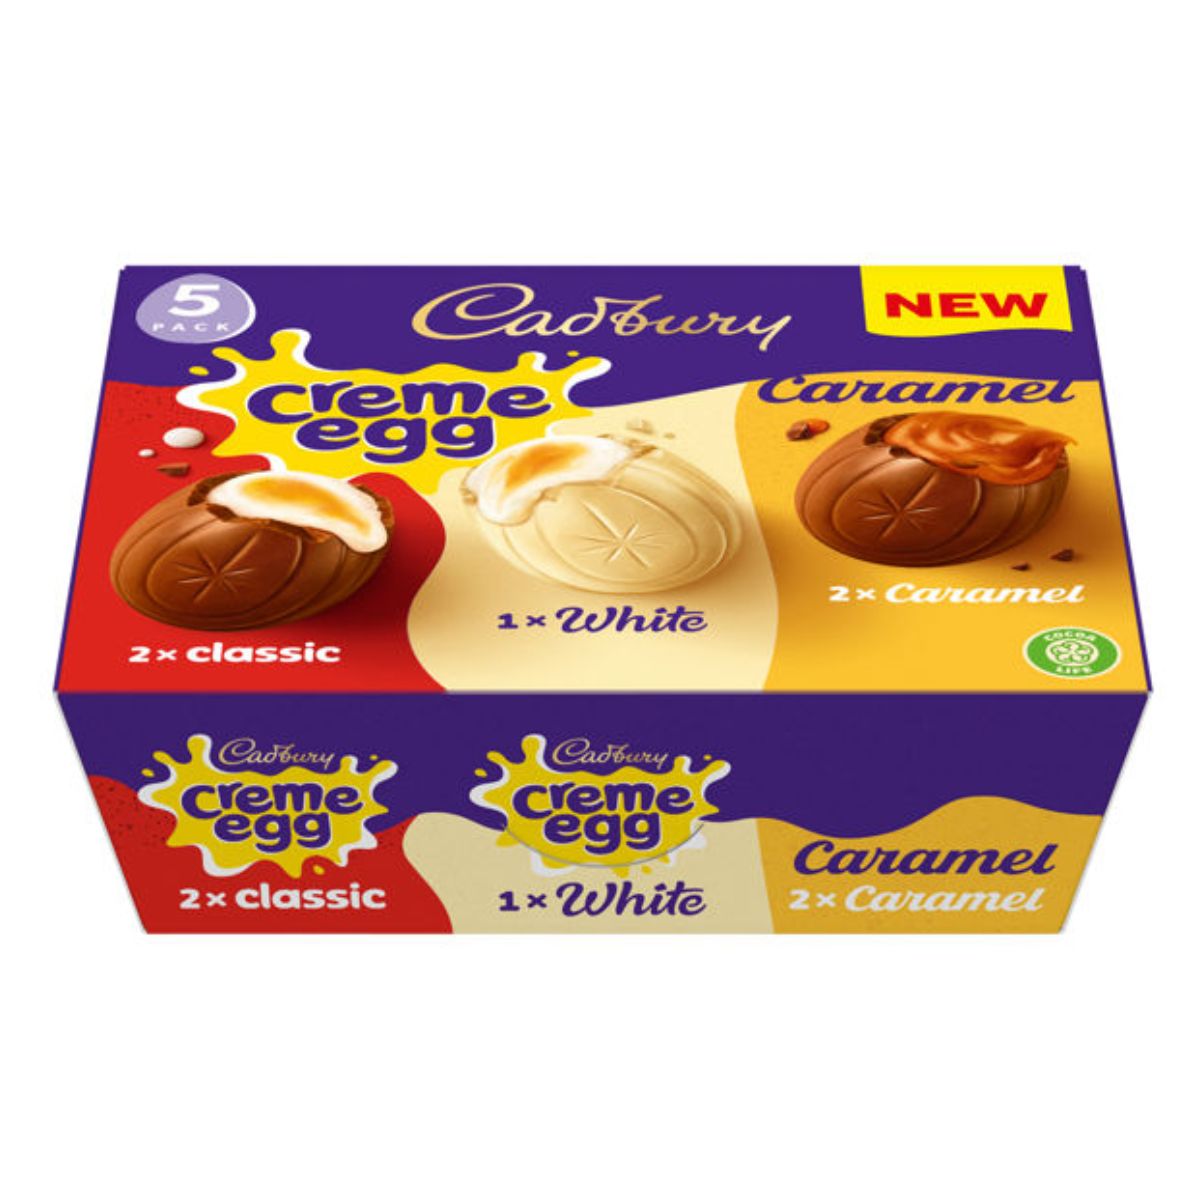 Cadbury - Mixed Creme Egg 5pcs - 200g in a box.